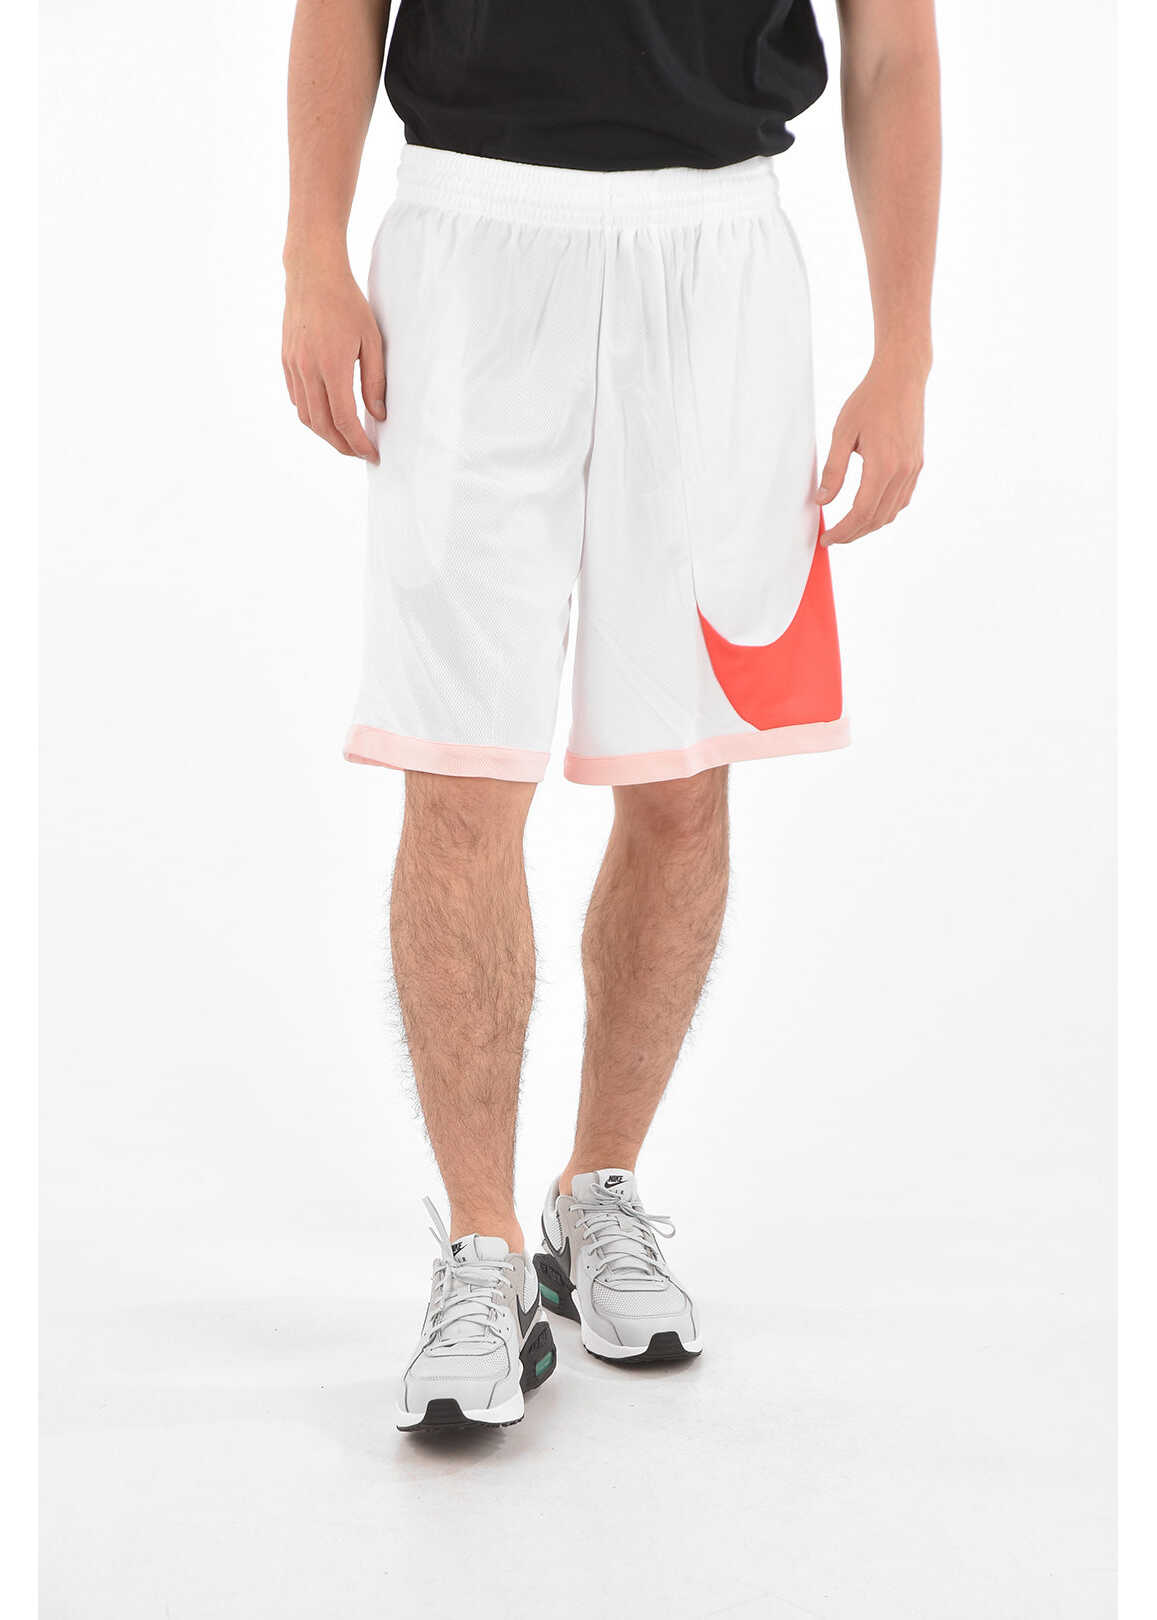 Nike Loose Fit Shorts White image